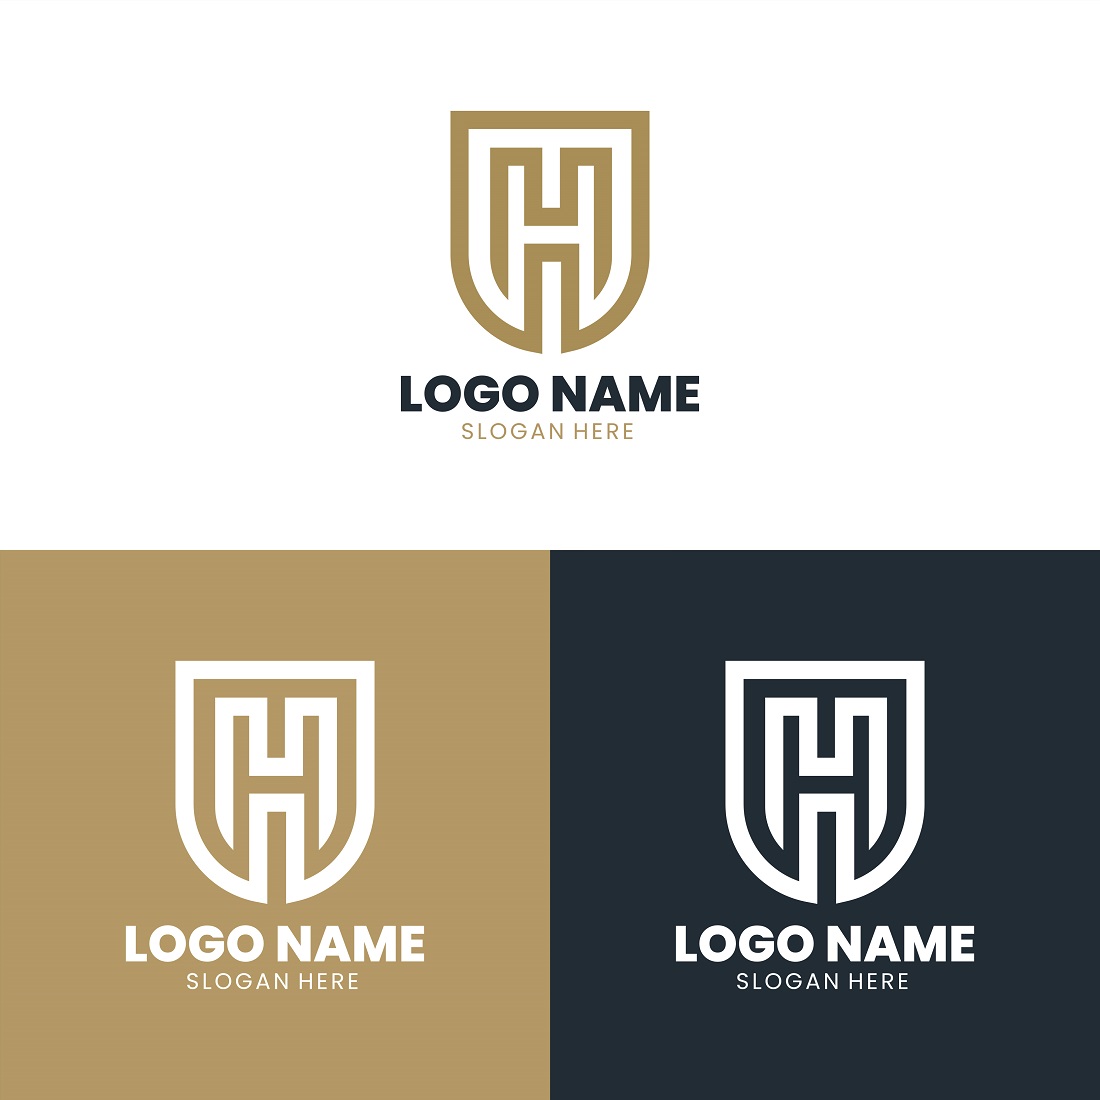 Flat design letter h logo template cover image.